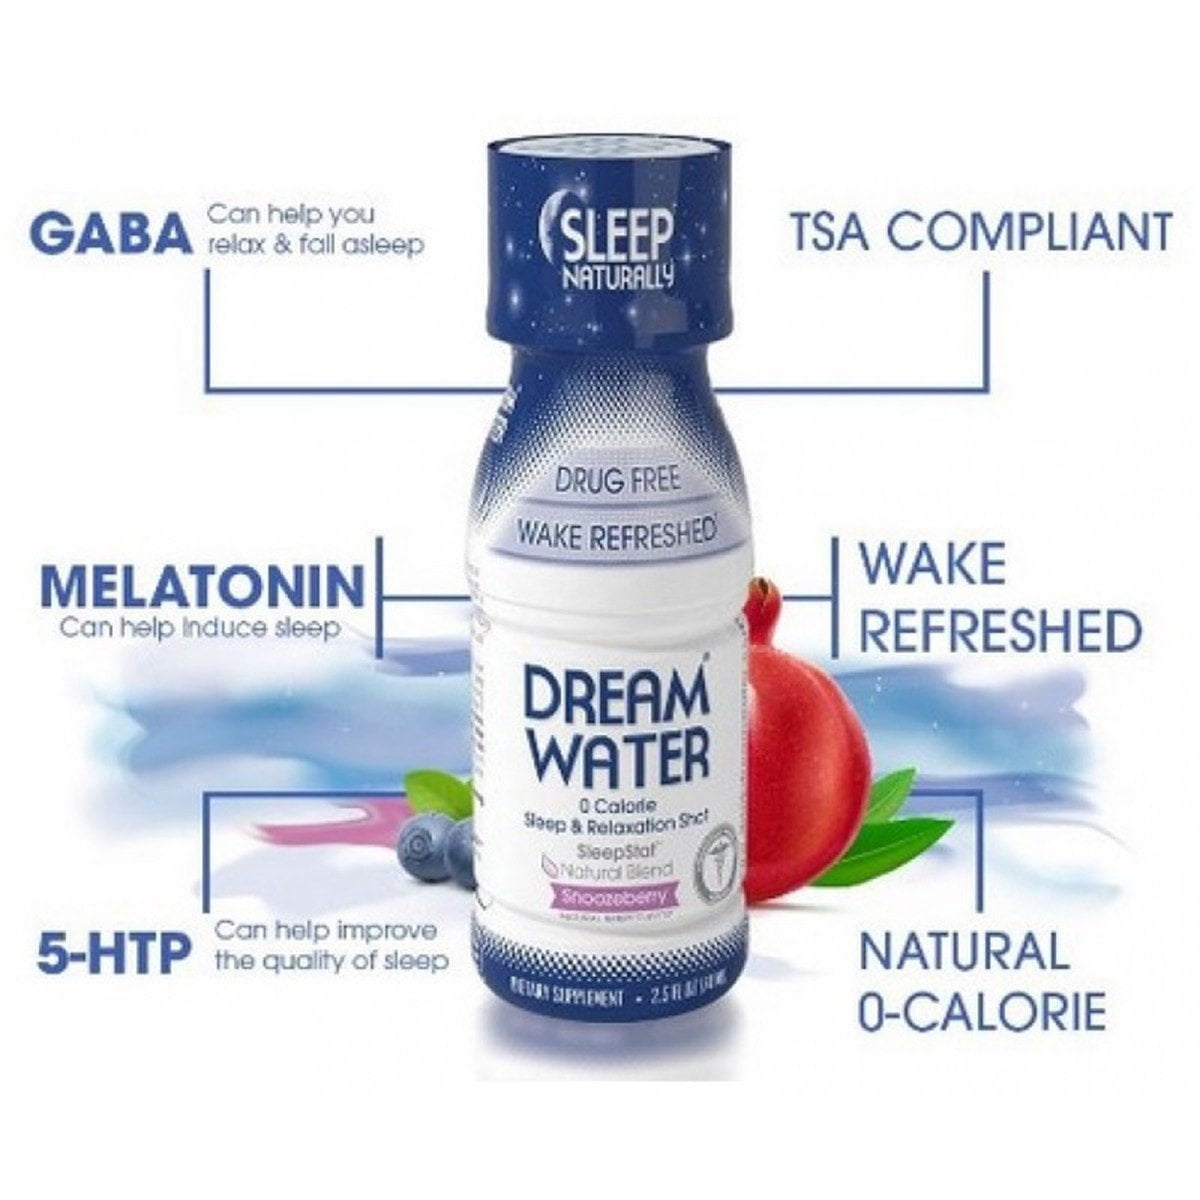 Dream Water Natural Sleep & Relaxation Aid Shot, 0 Calorie, GABA, MELATONIN, 5-HTP, 2.5oz Shot, Snoozeberry, 12 Value Pack, Product image 2